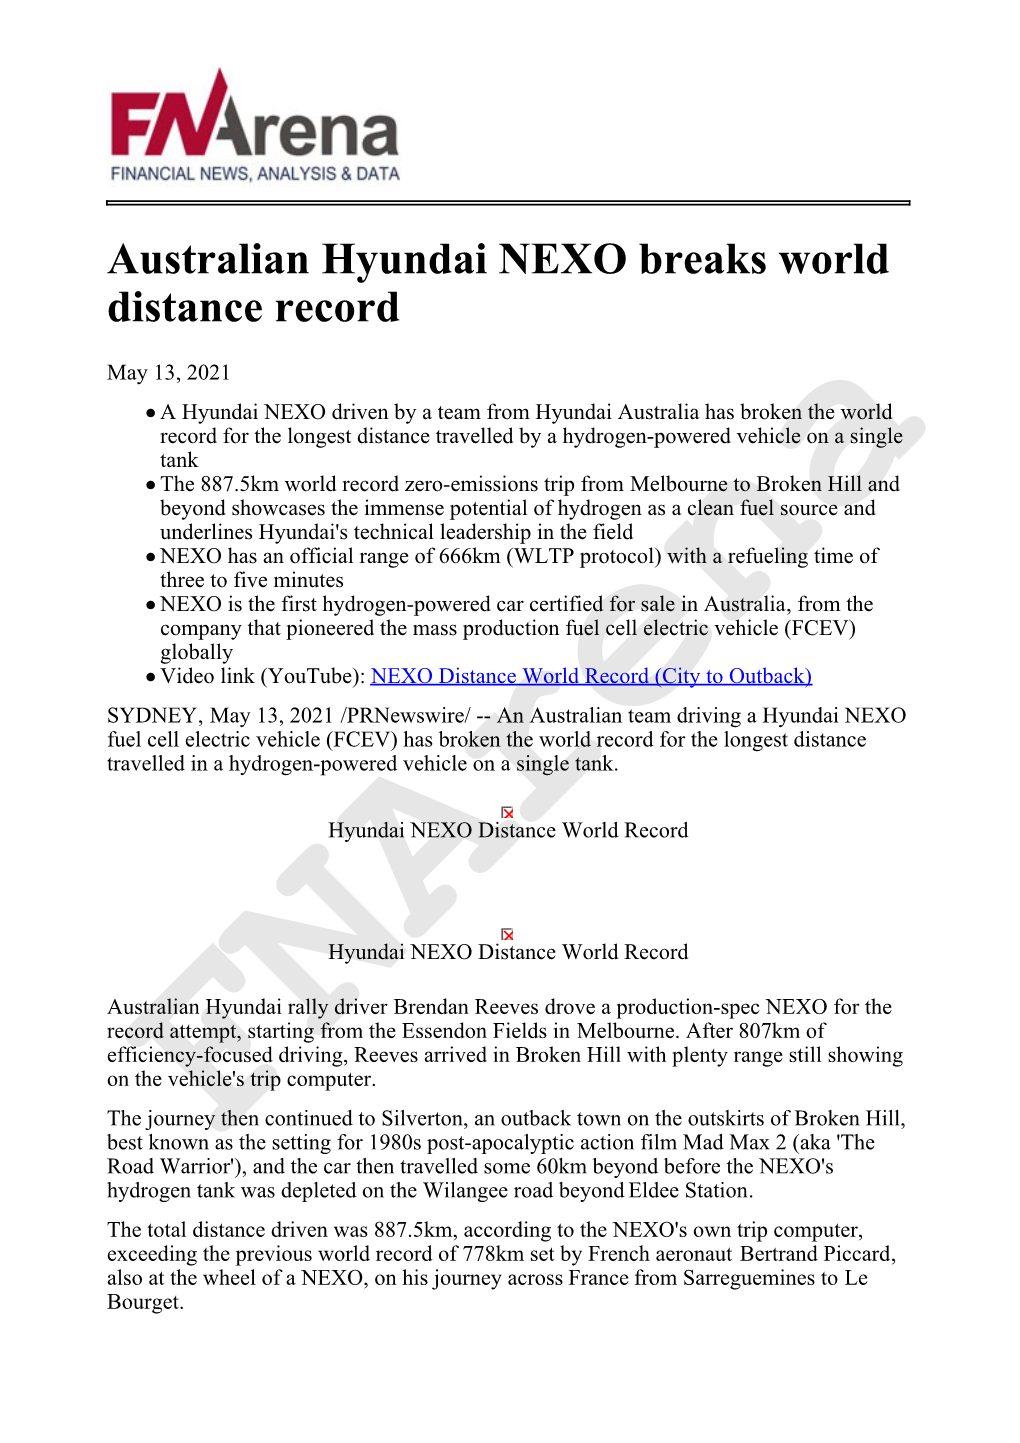 Australian Hyundai NEXO Breaks World Distance Record